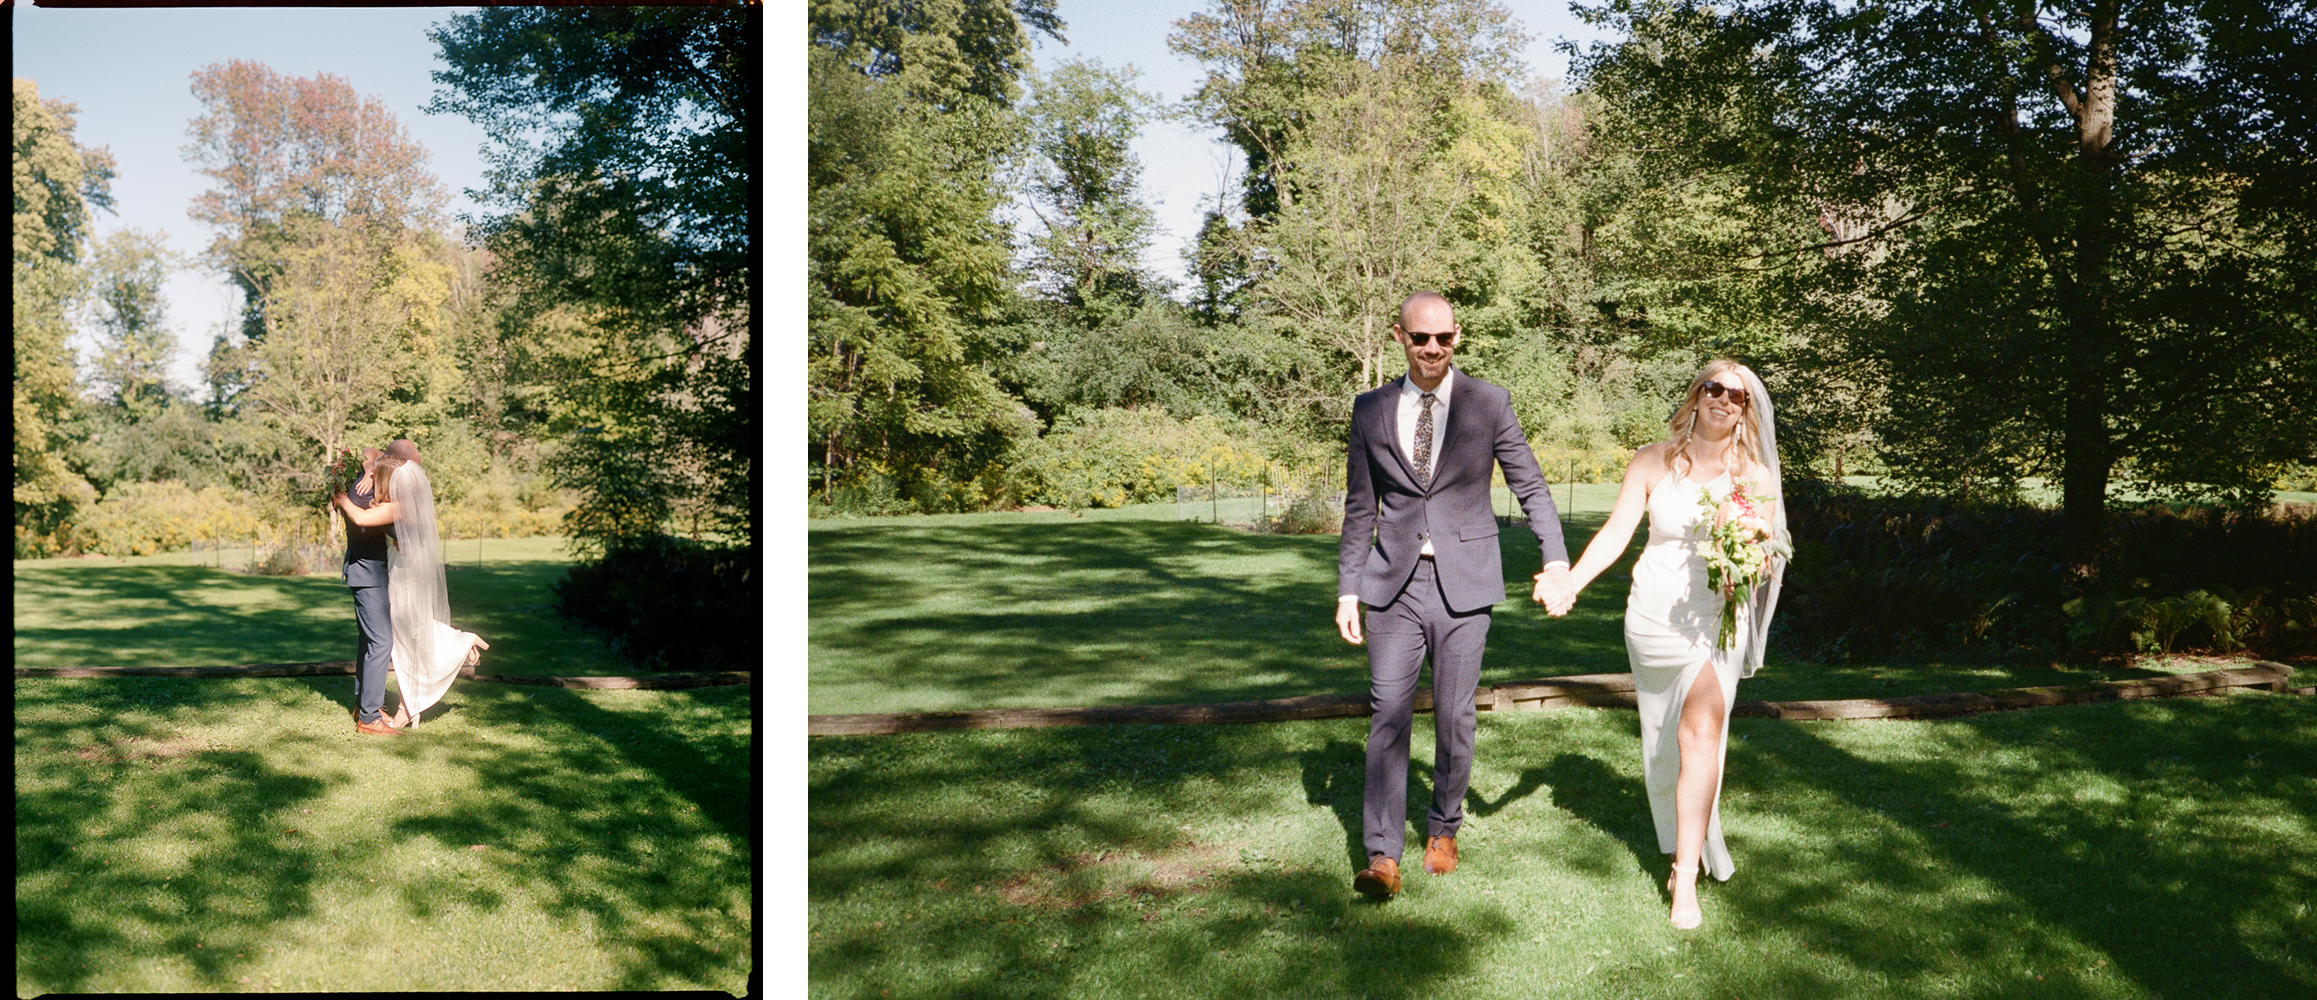 Analog-Film-Micro-Wedding-Photos-Inspiration-Backyard-Toronto-Ontario-46.PNG